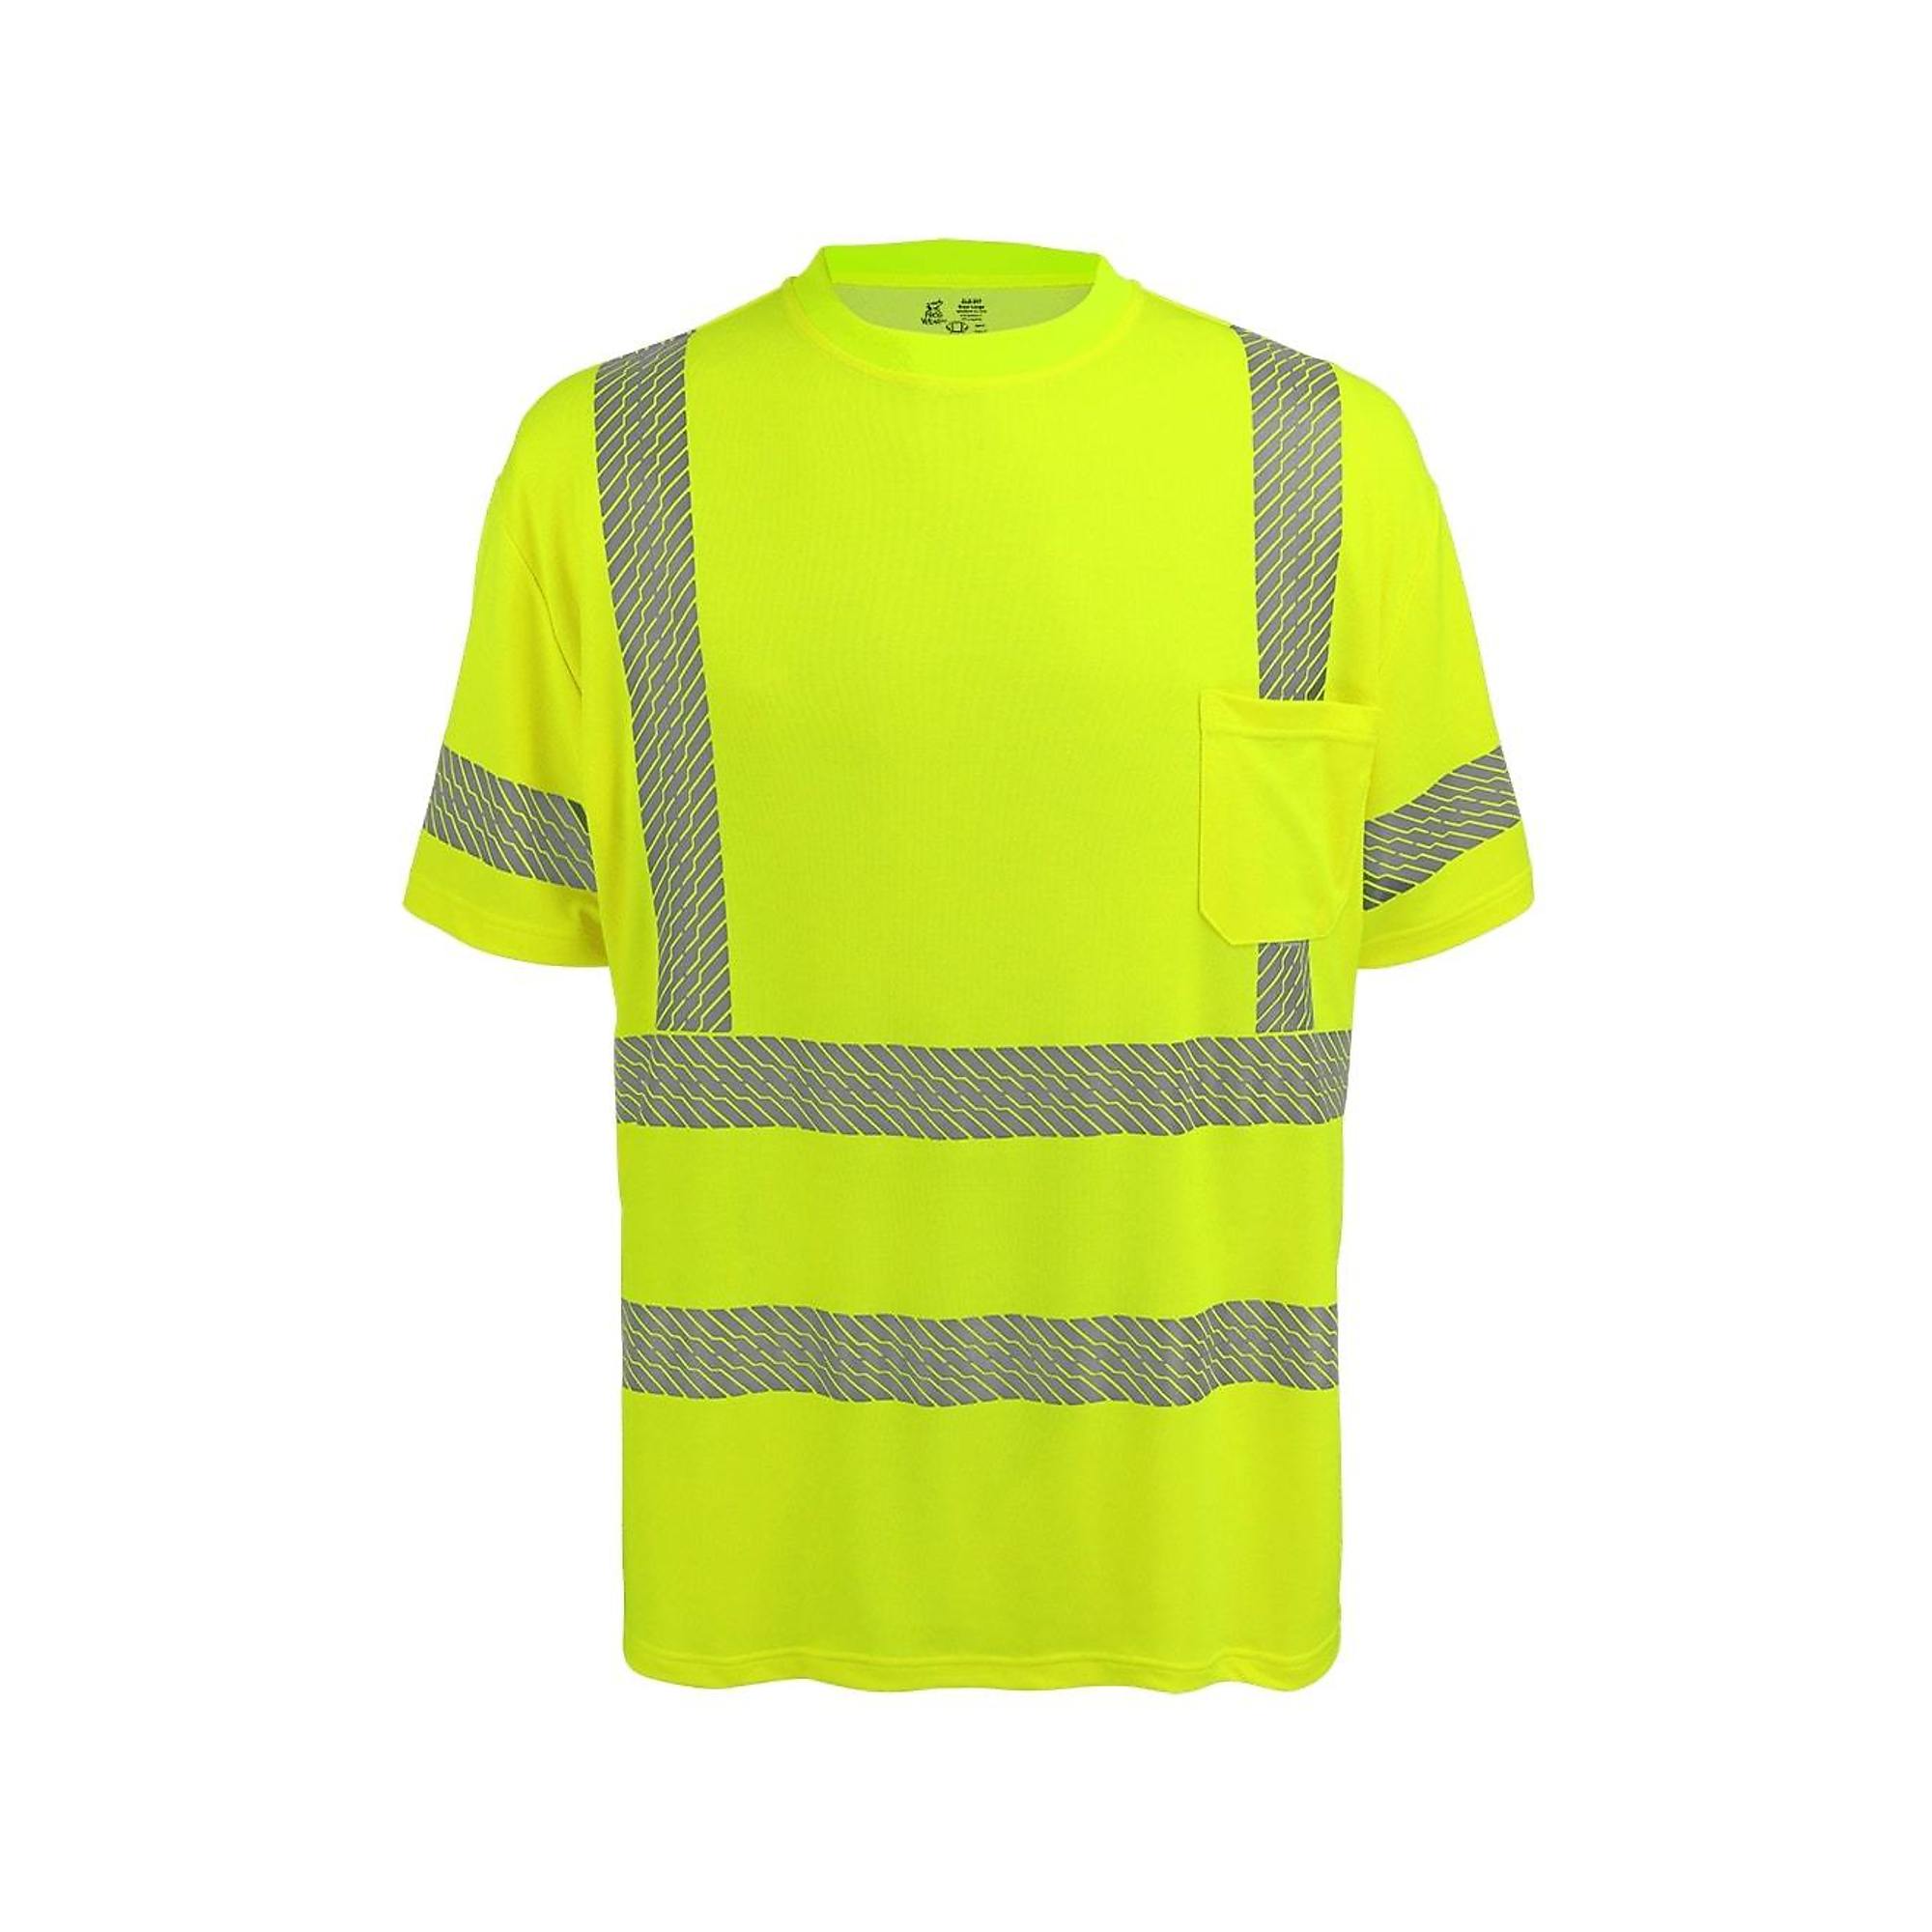 FrogWear, HV Yellow/Green,Class 3Bamboo Self-Wicking, Athletic Shirt, Size 5XL, Model GLO-217-5XL